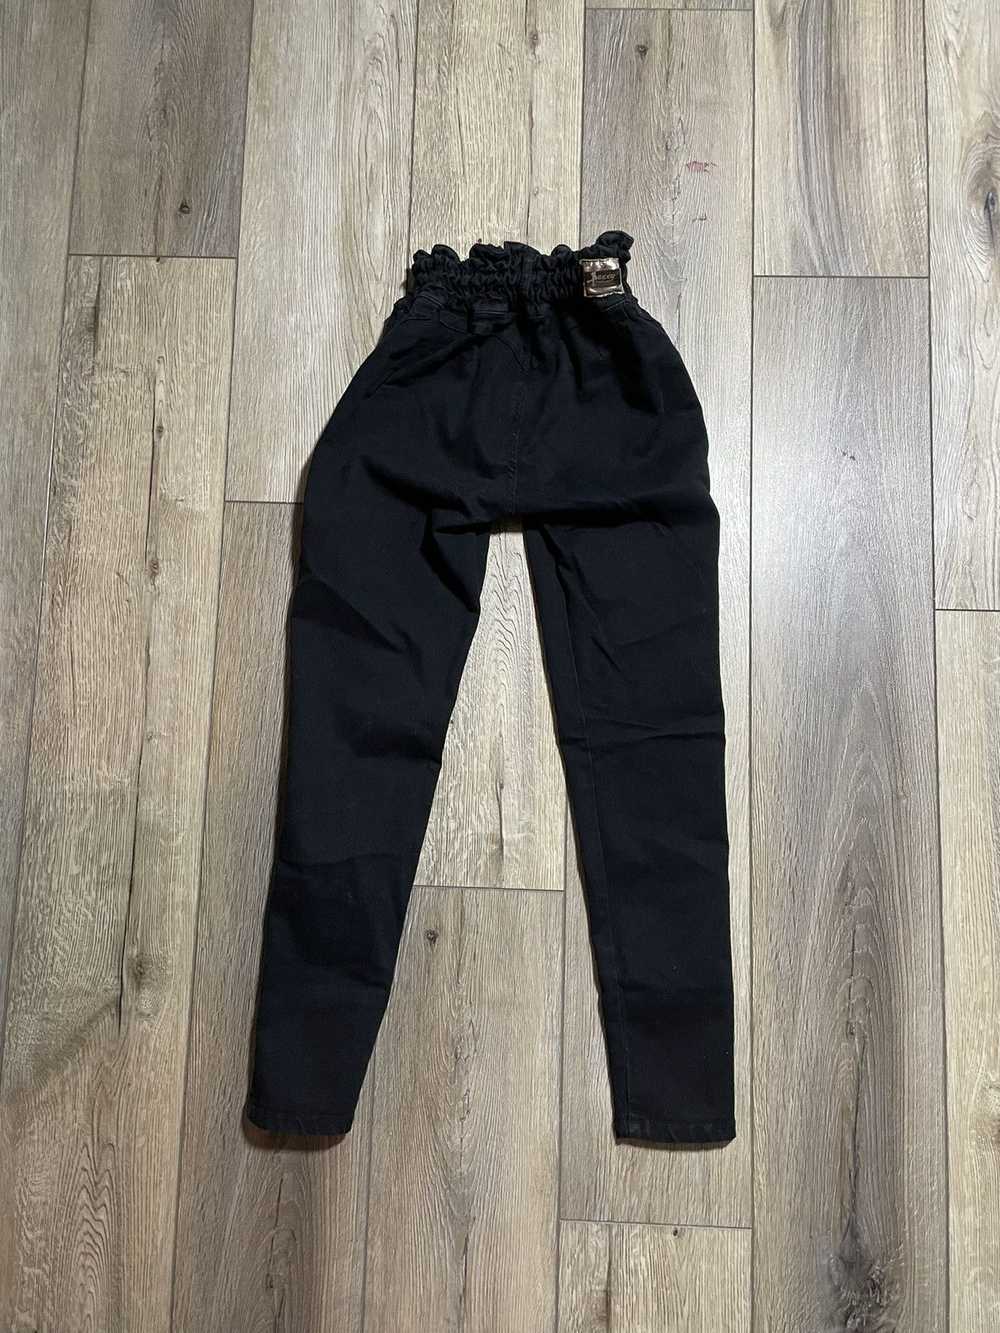 Other Black Jeans - image 2